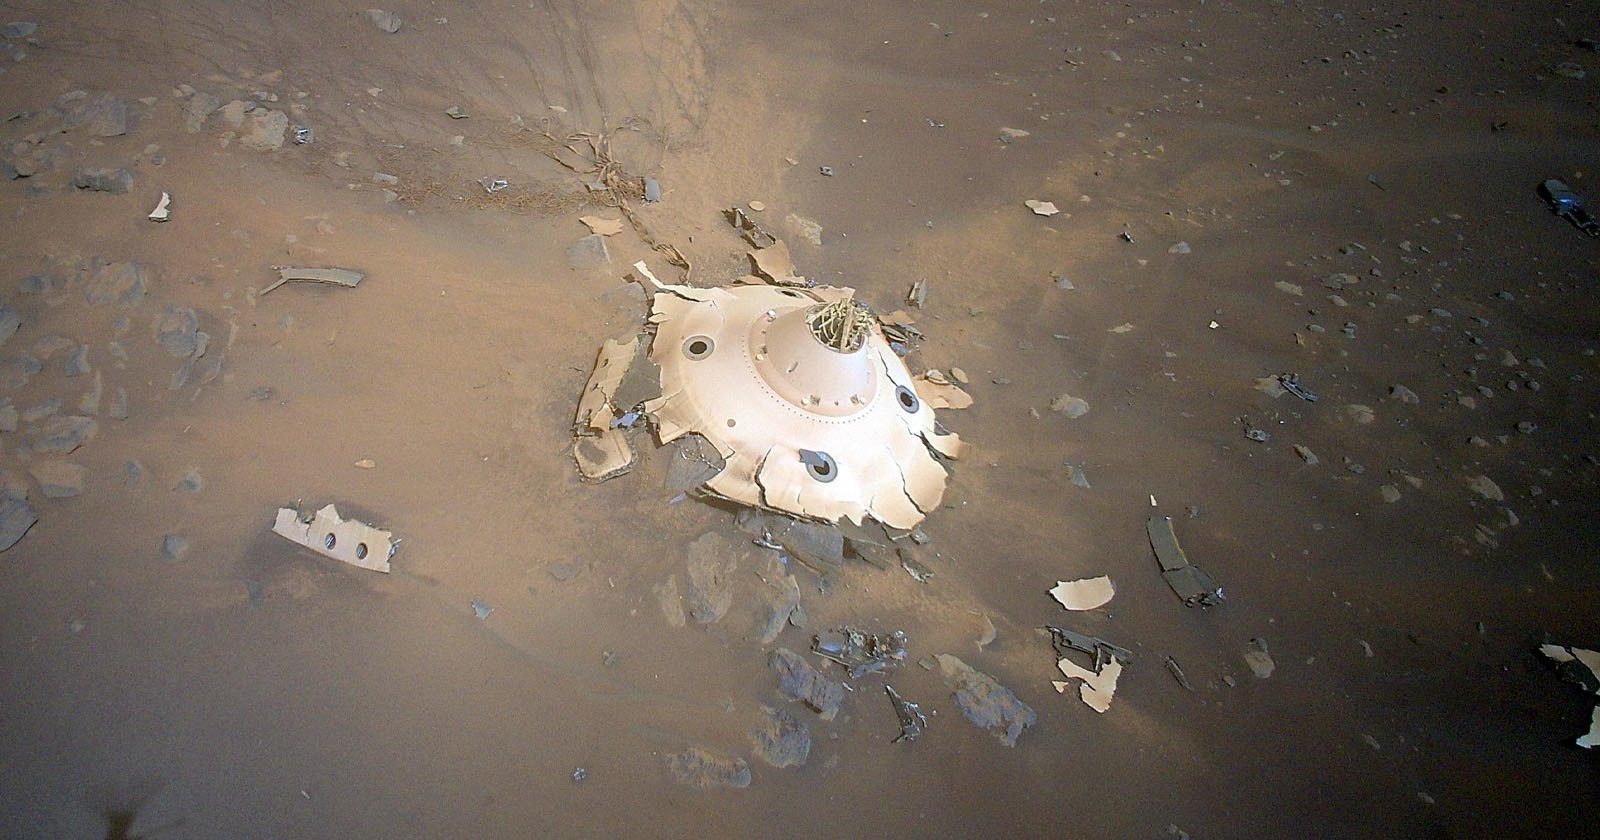  nasa ingenuity helicopter captures spacecraft wreckage mars 